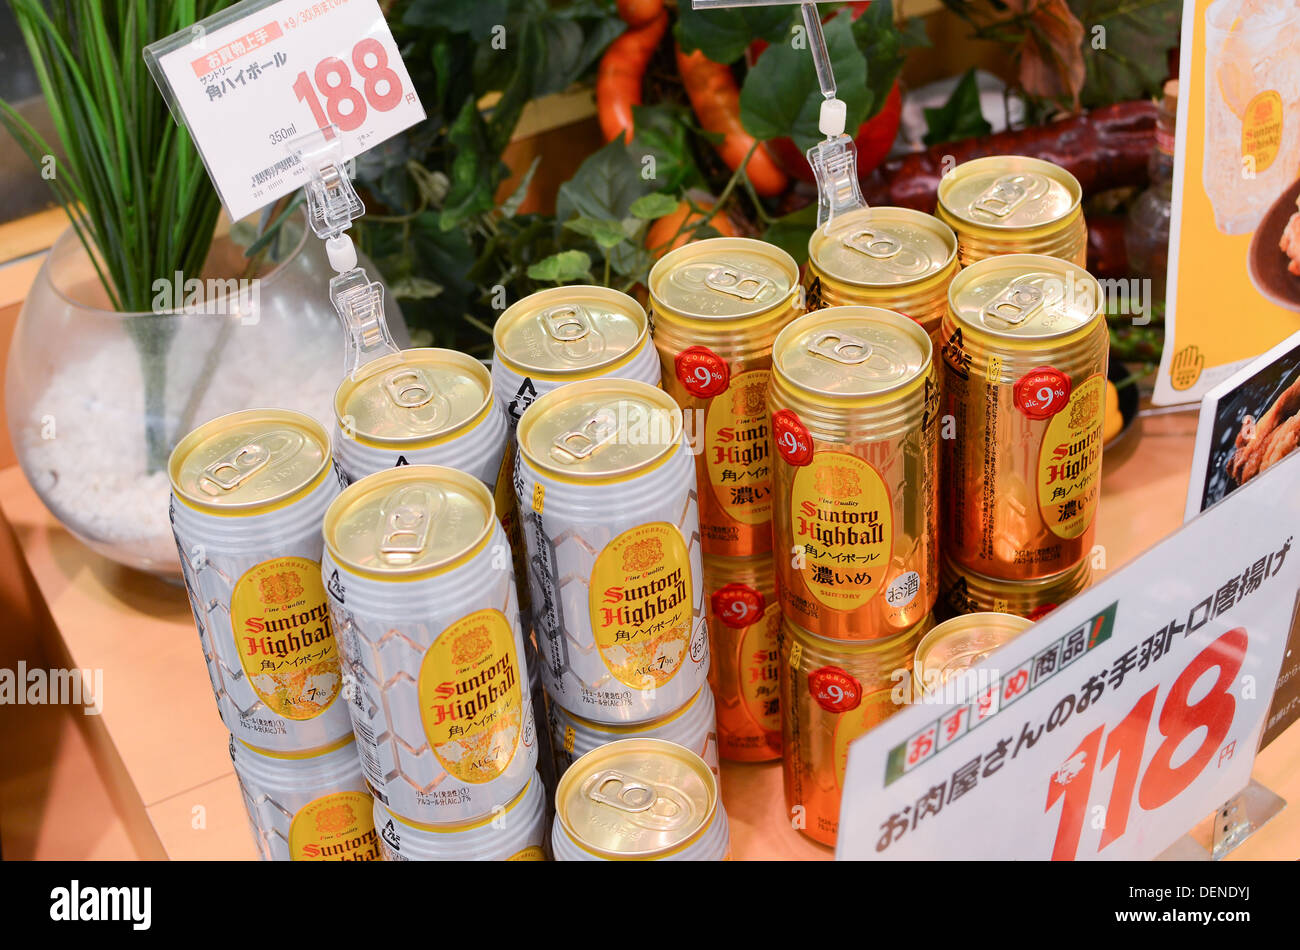 Le lattine di highball dal giapponese drinks company Suntory. Foto Stock